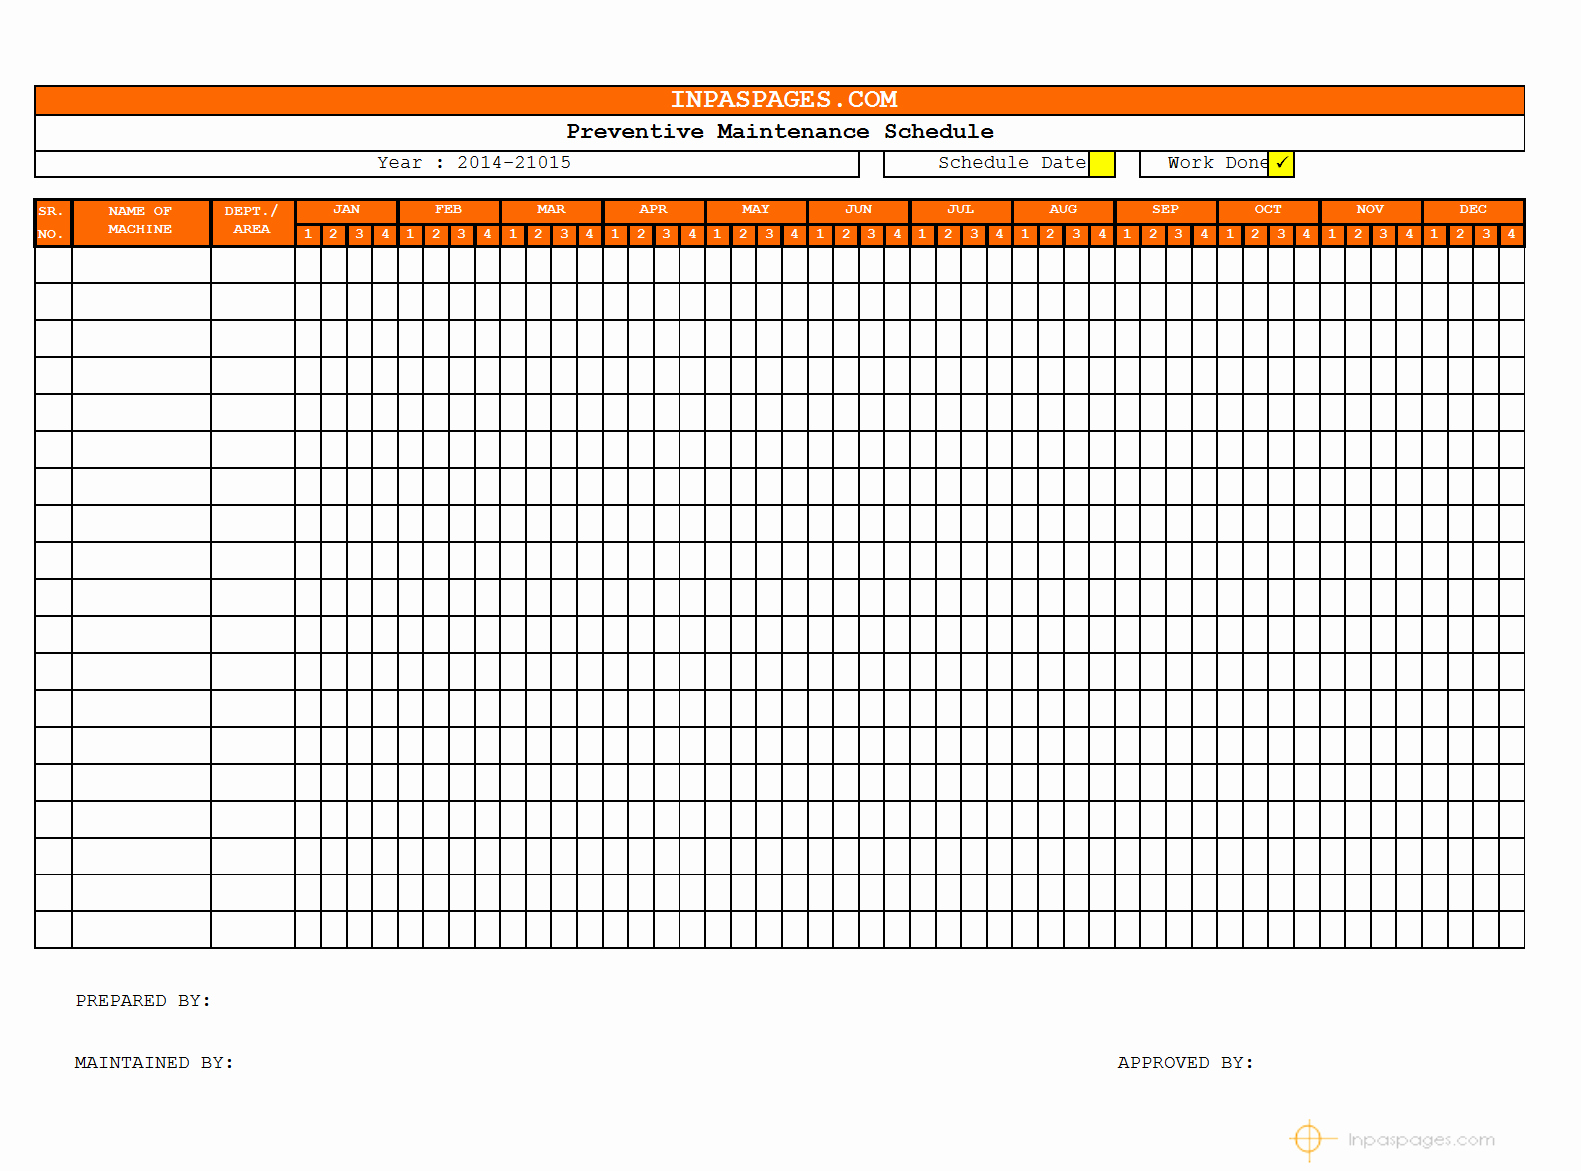 Preventive Maintenance Schedule Template Excel Inspirational Free Preventive Maintenance Schedule Template